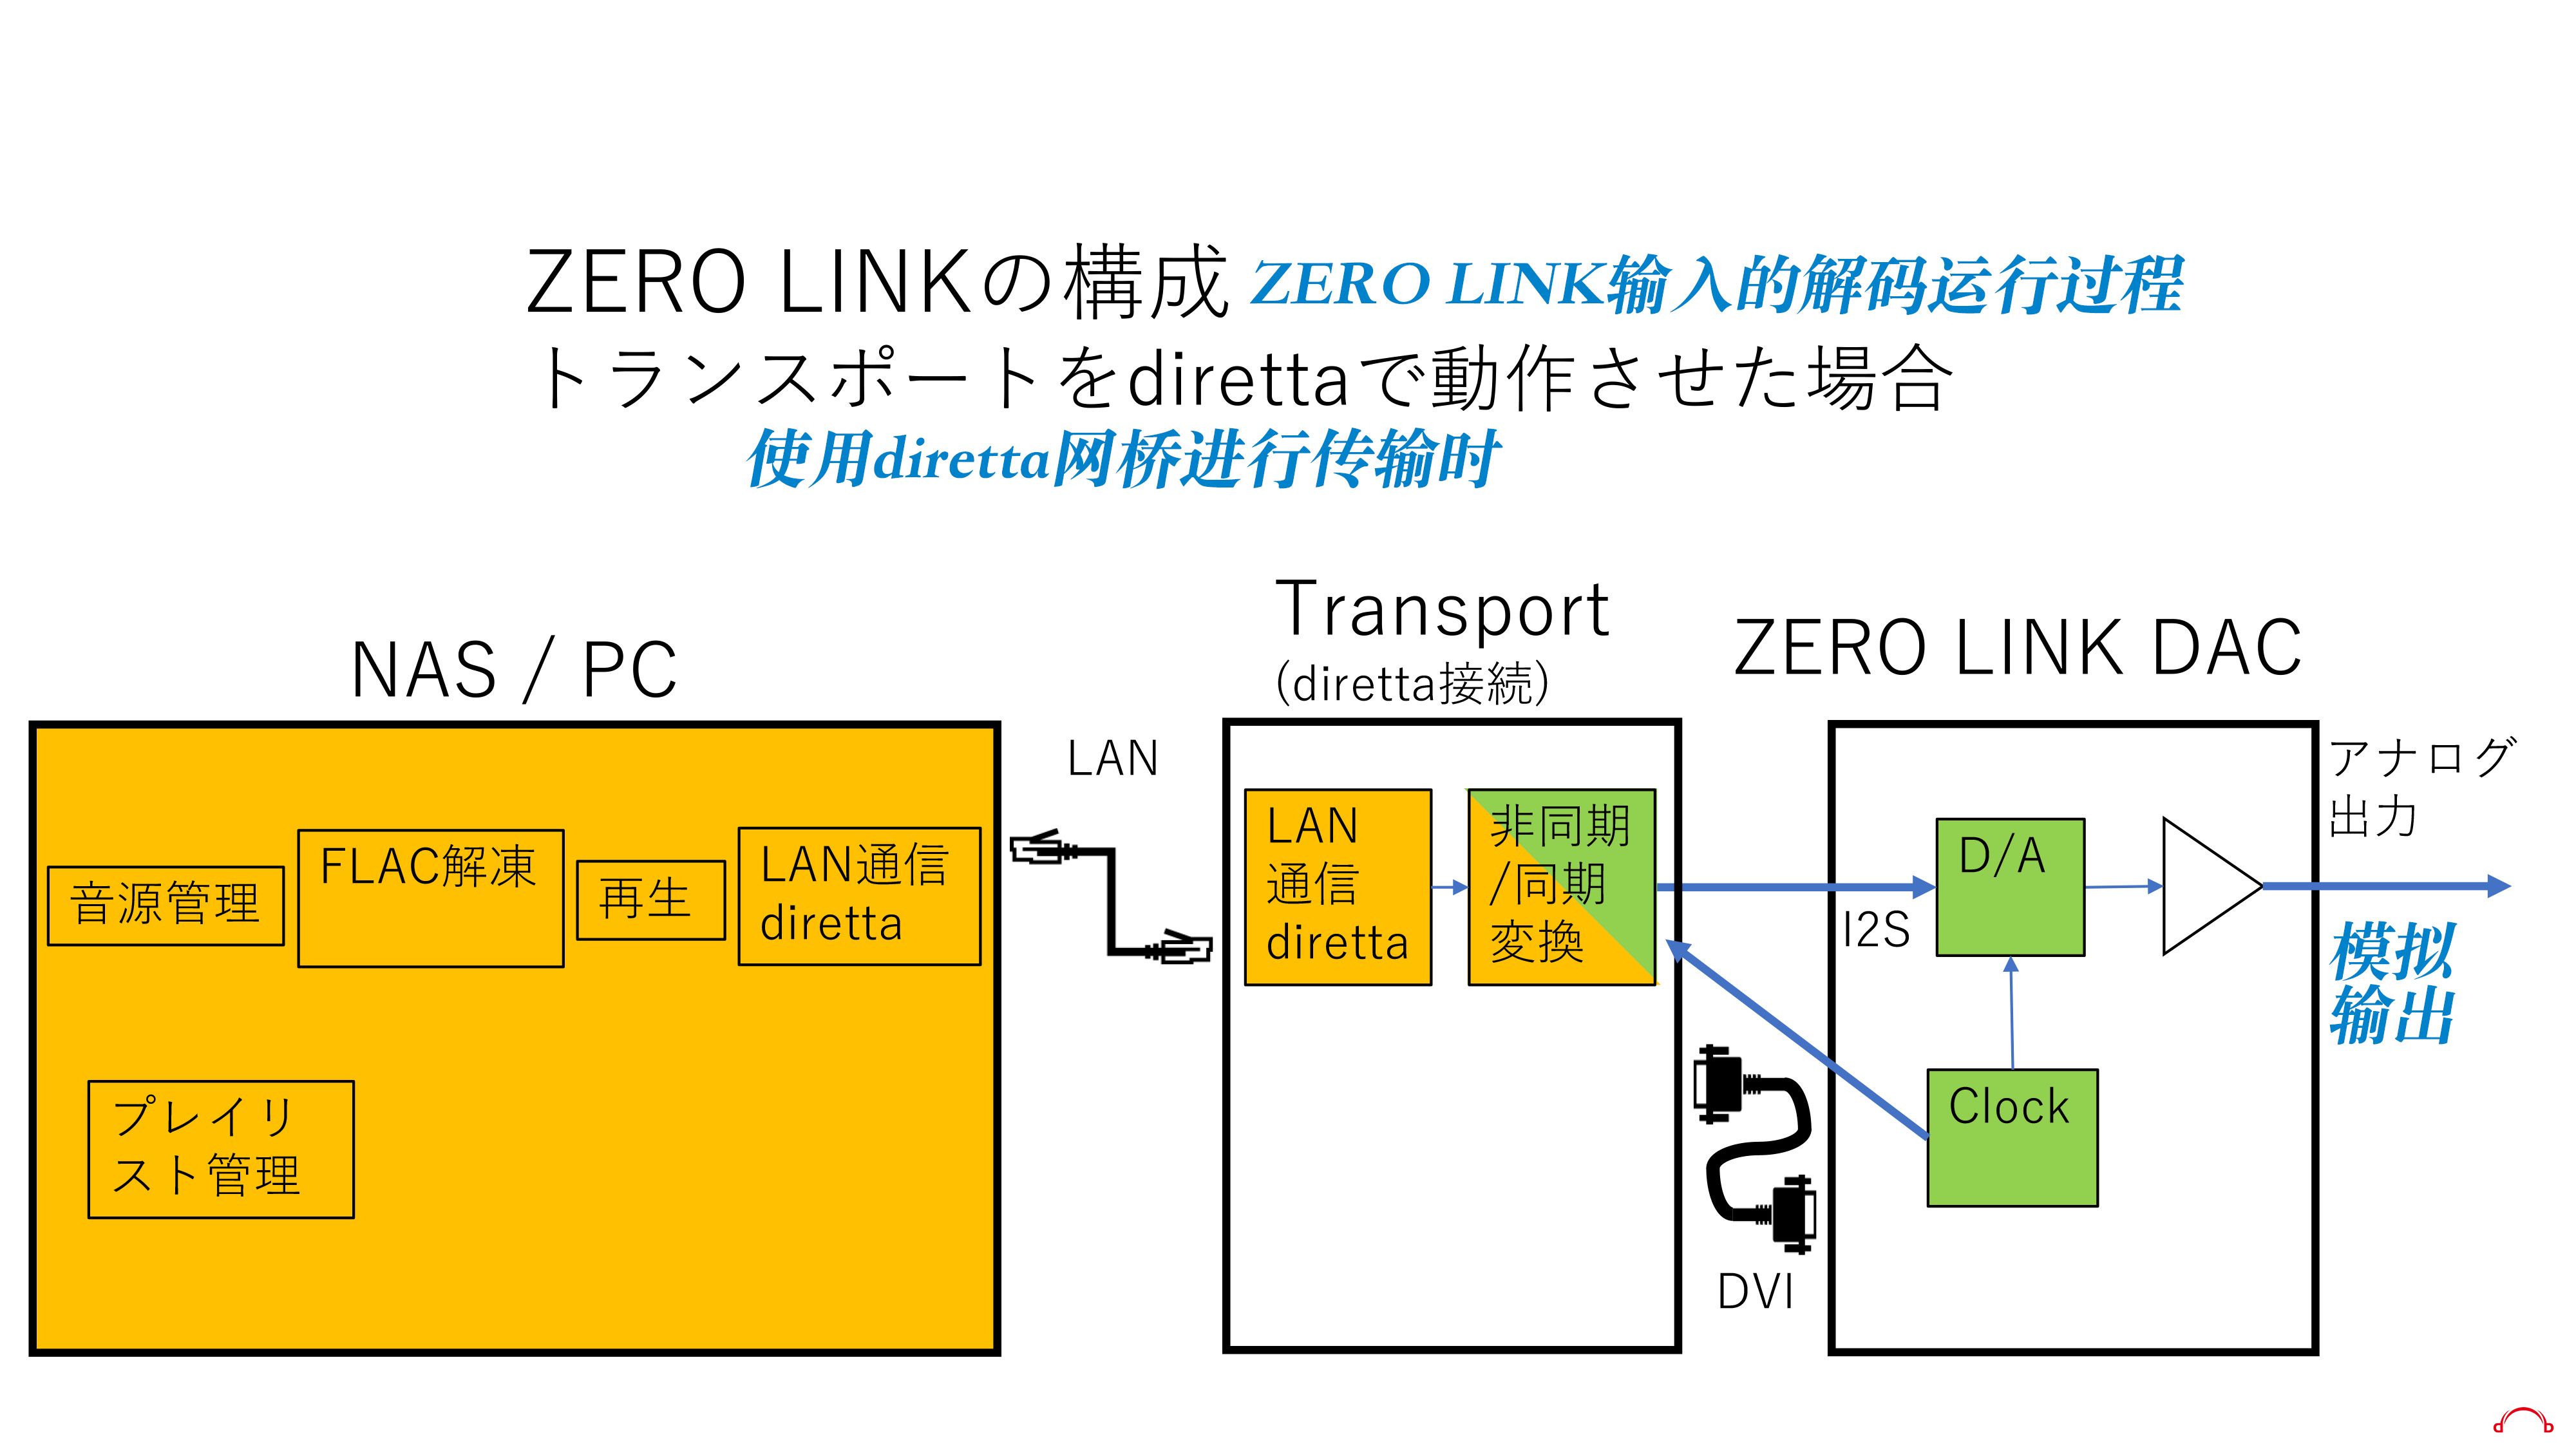 zerolink_info1-6.jpg